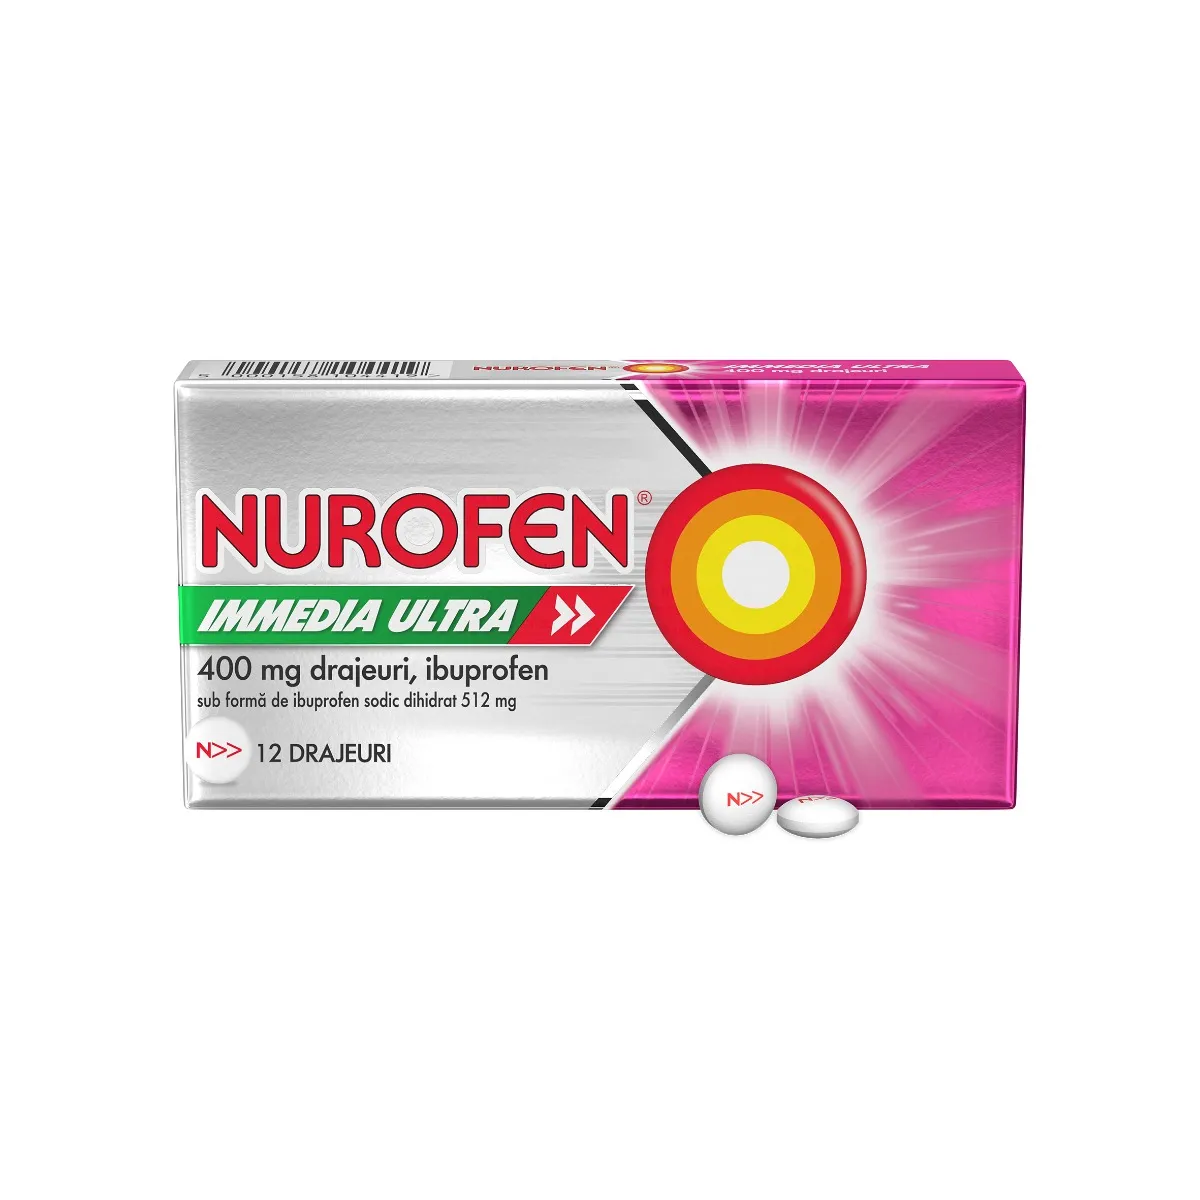 Nurofen Immedia Ultra 400 mg, 12 drajeuri, Reckitt Benckiser